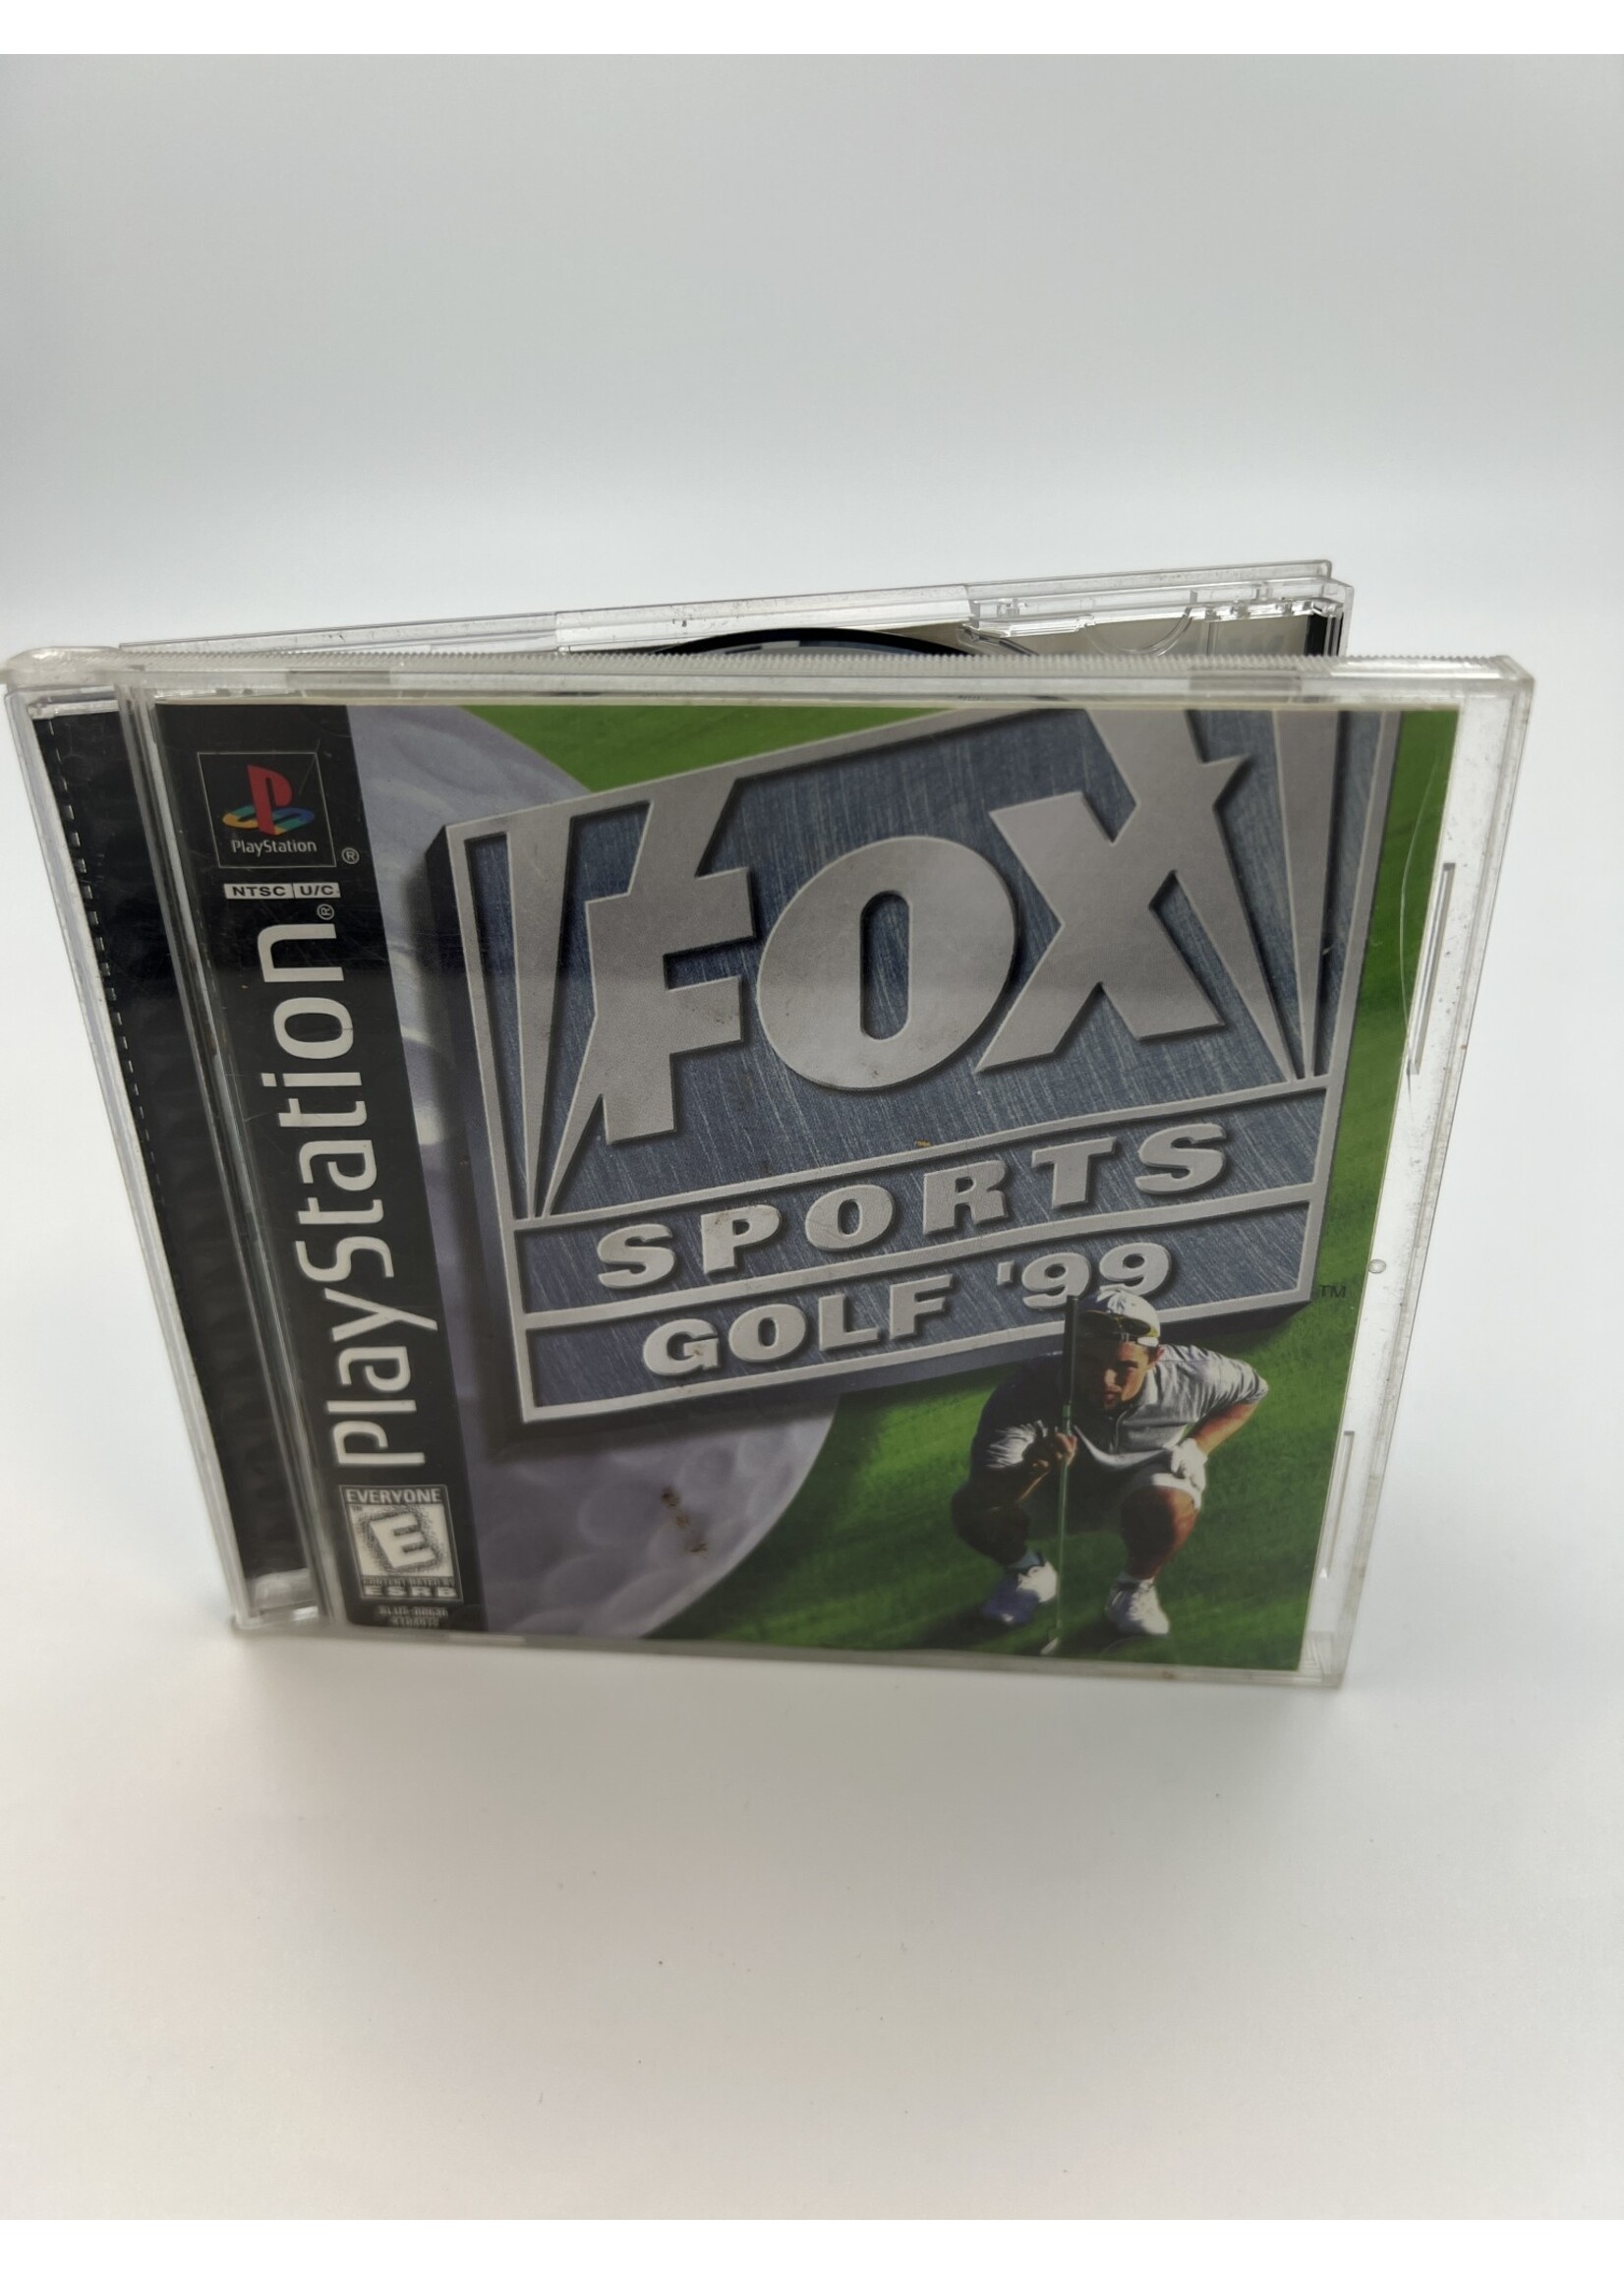 Sony   Fox Sports Golf 99 Ps